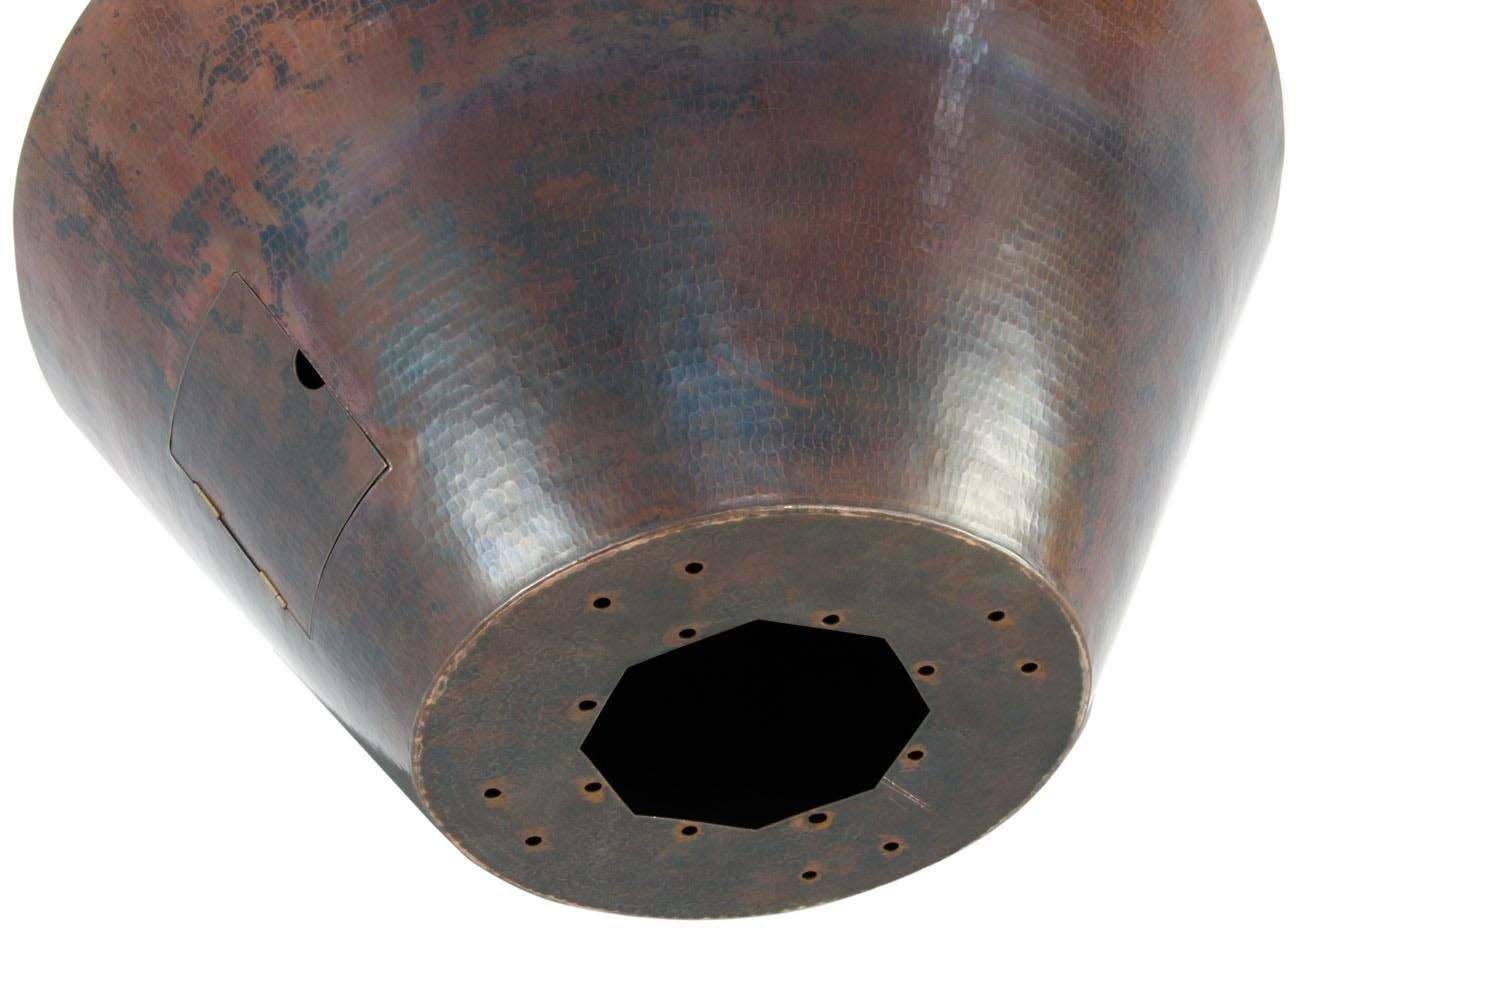 HPC Fire 32" Mesa Hammered Copper Gas Fire Bowl with Torpedo Penta Burner